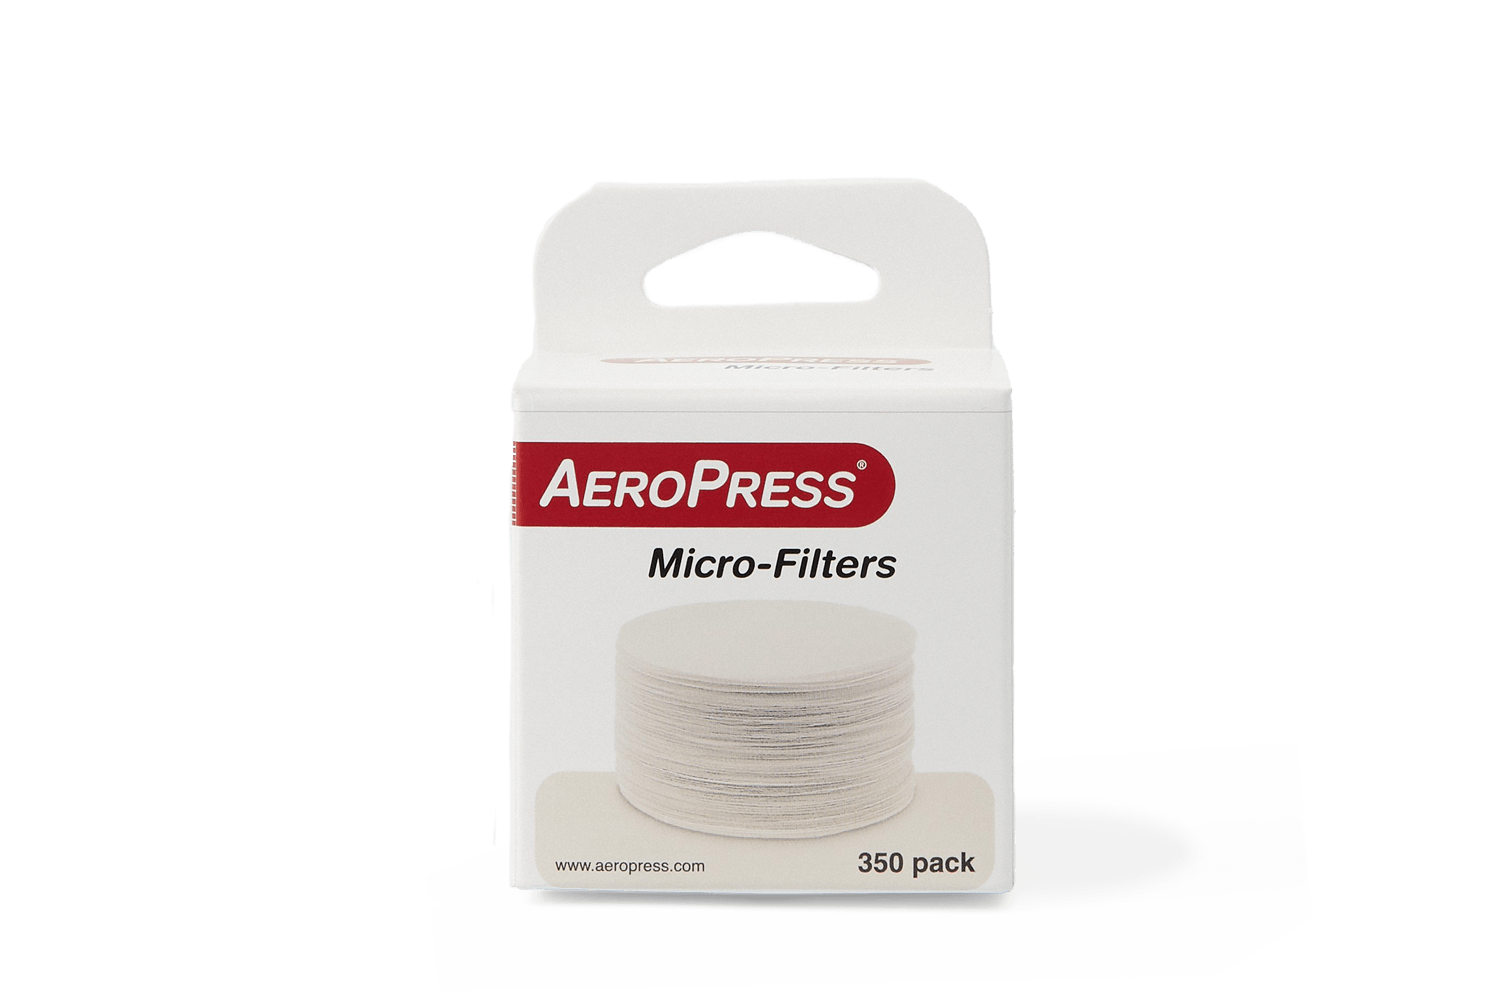 Aeropress Micro-filters